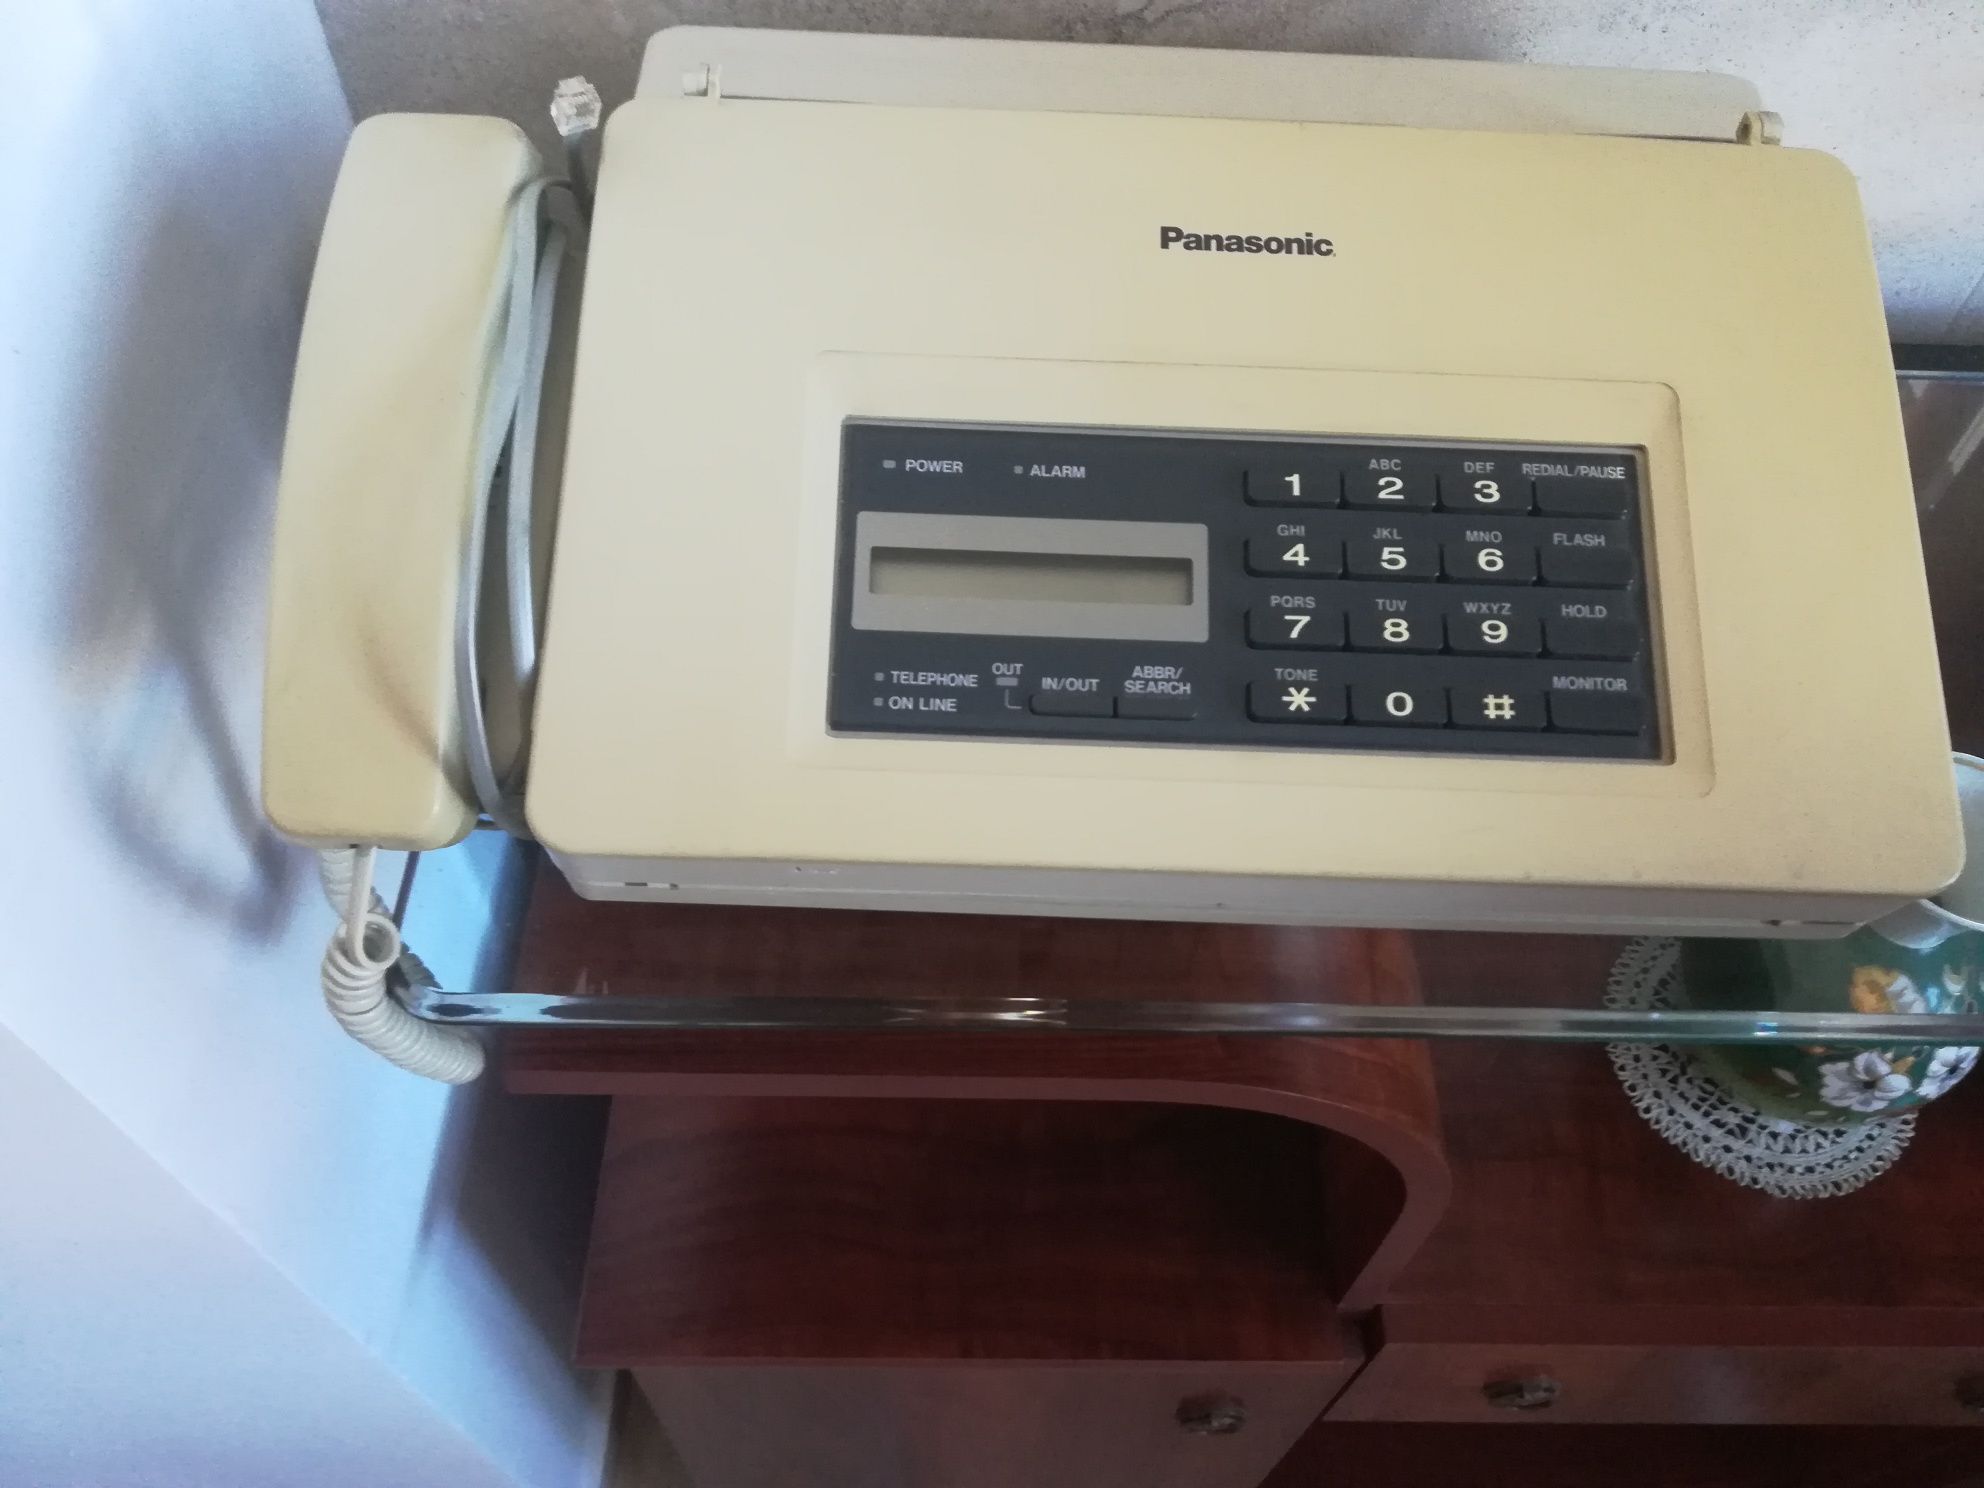 Telefax Panasonic uv V 40